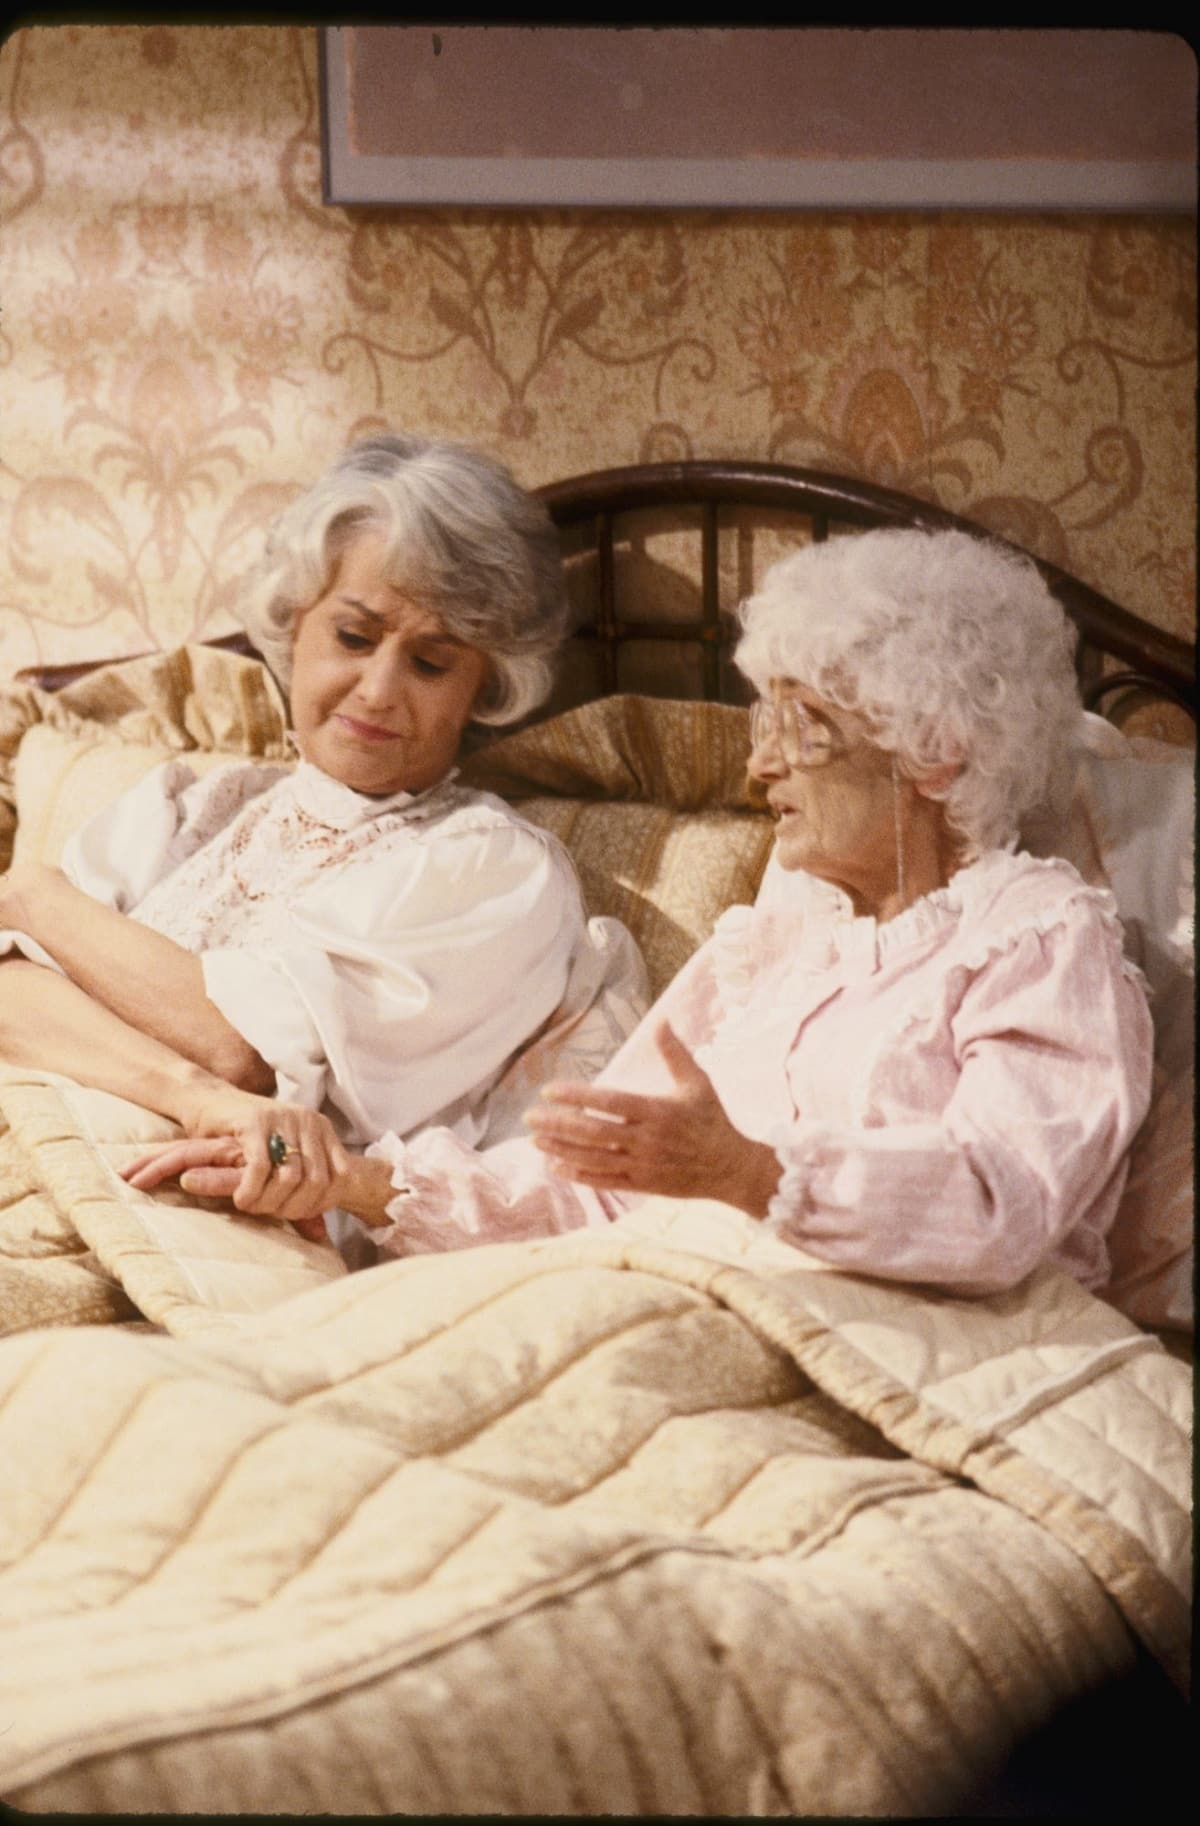 Bea Arthur as Dorothy Zbornak and Estelle Getty as Sophia Petrillo in The Golden Girls